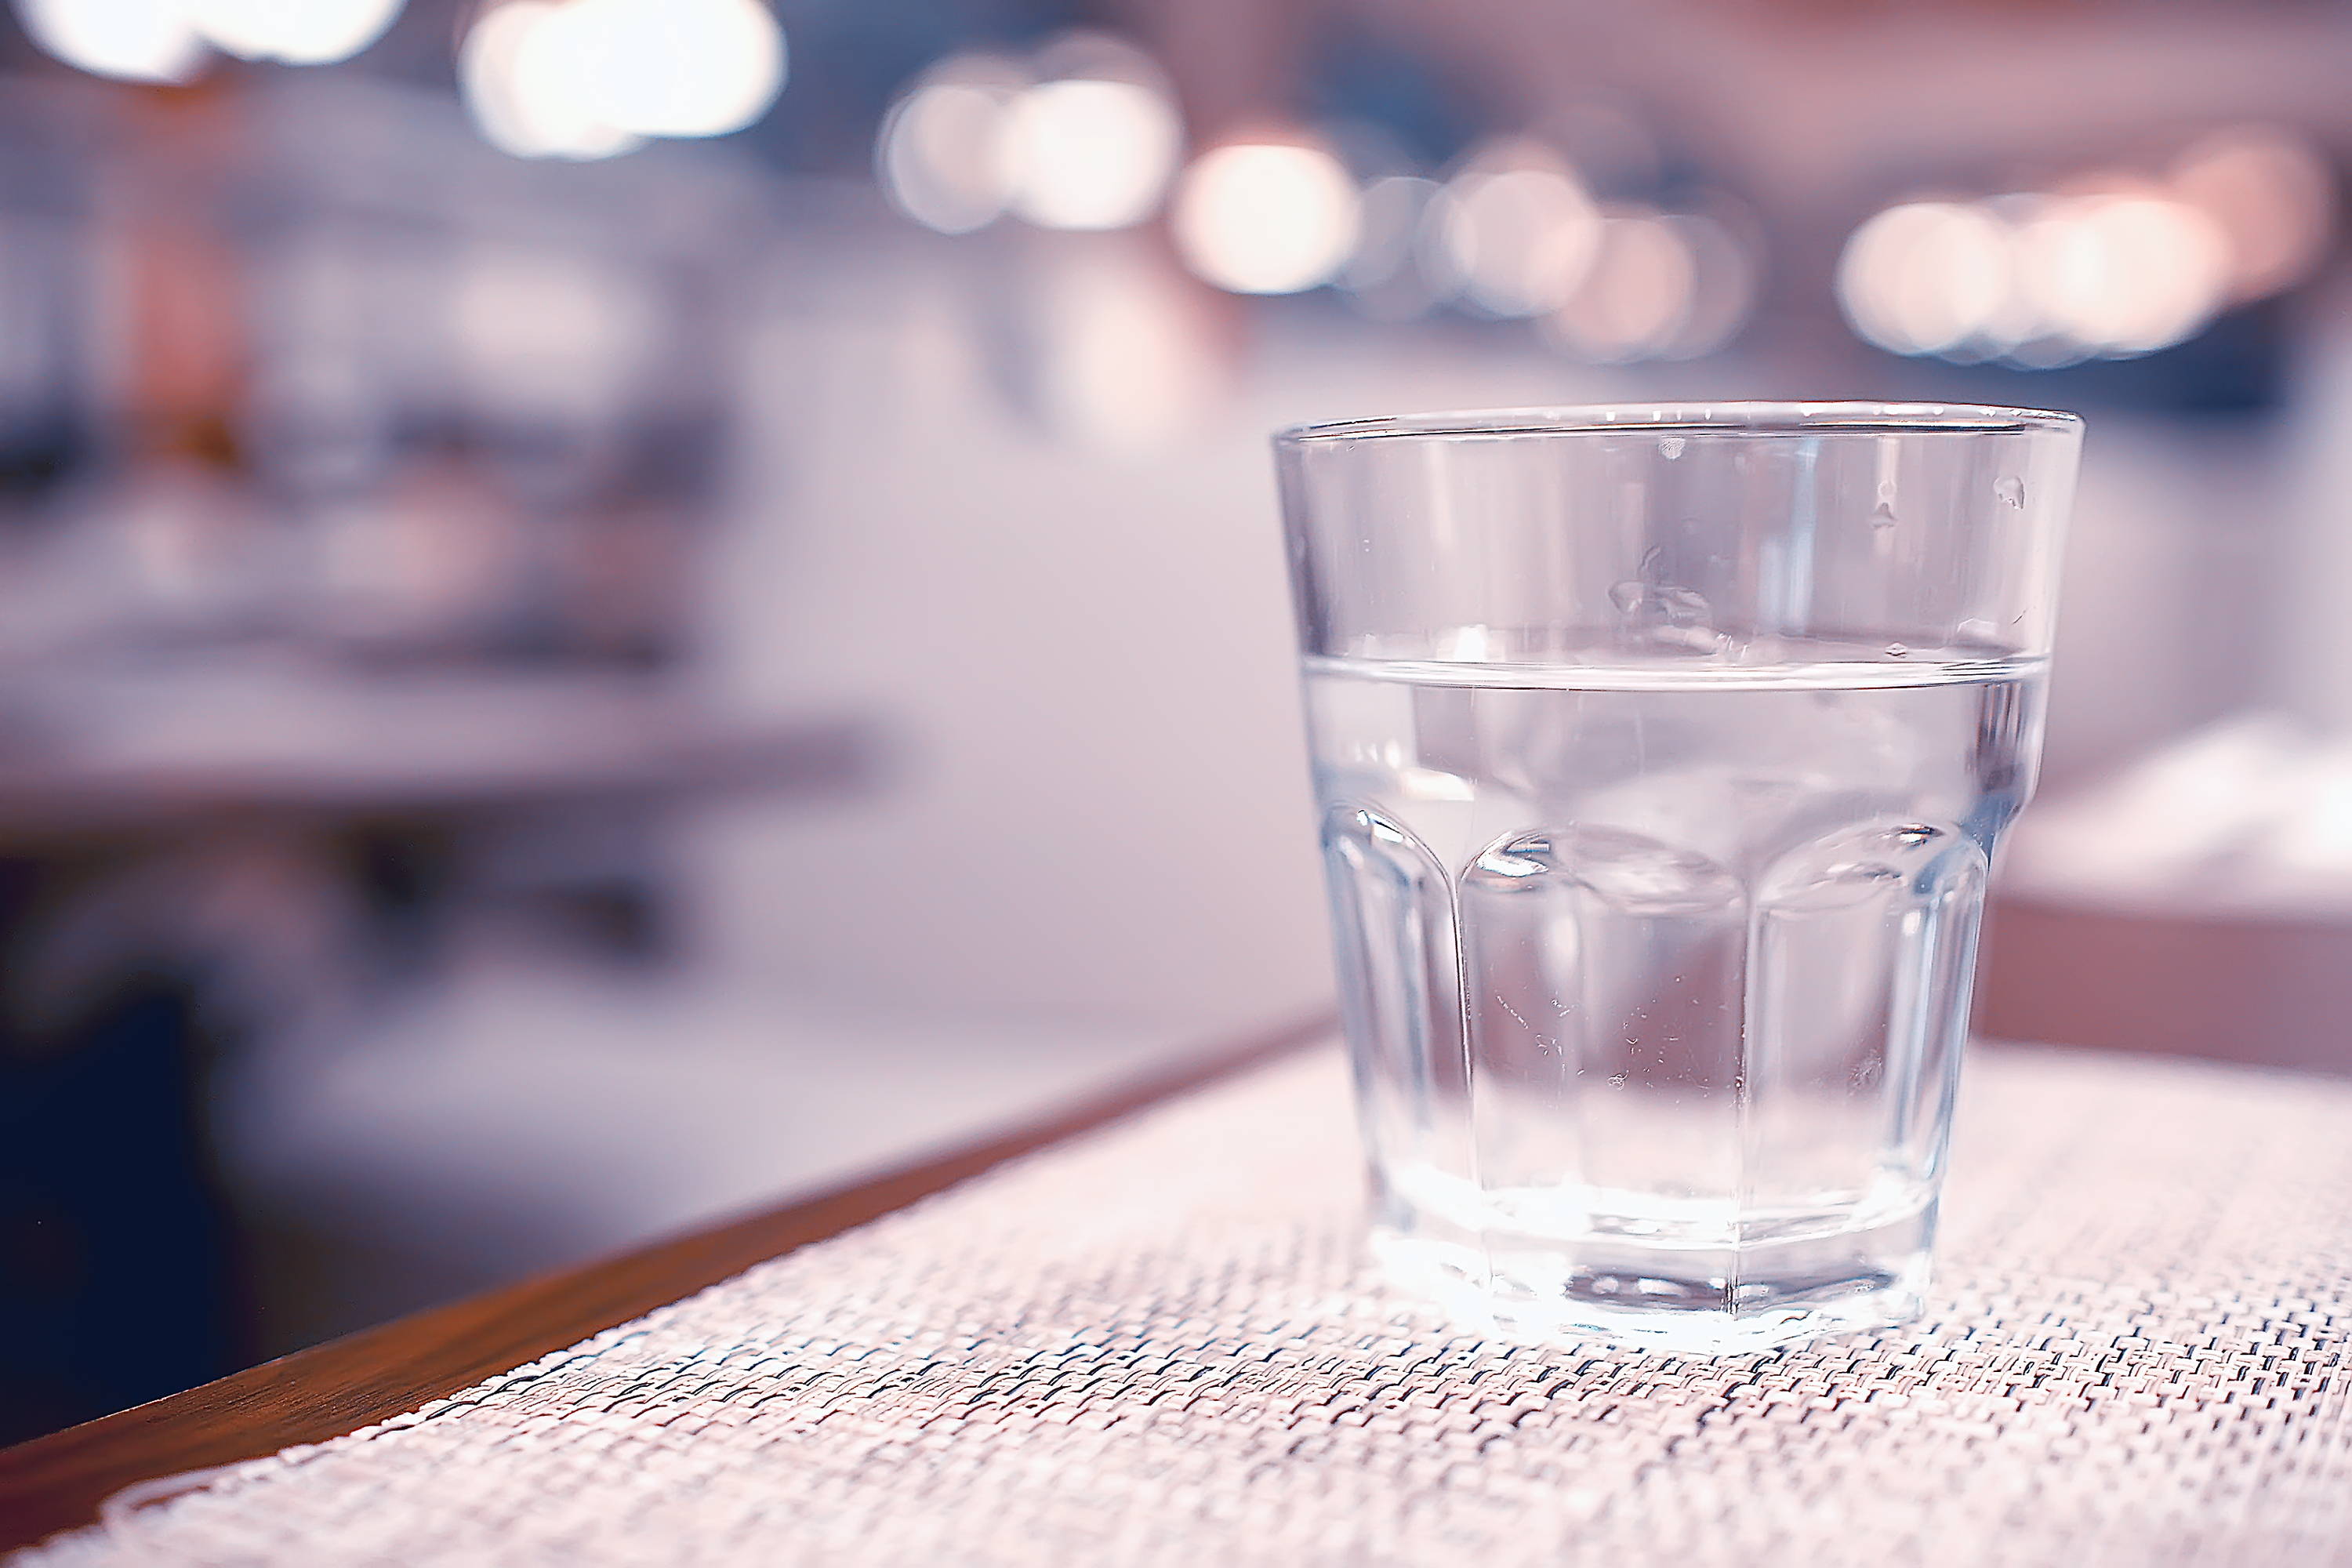 UV treatment helps restaurants serve safe water